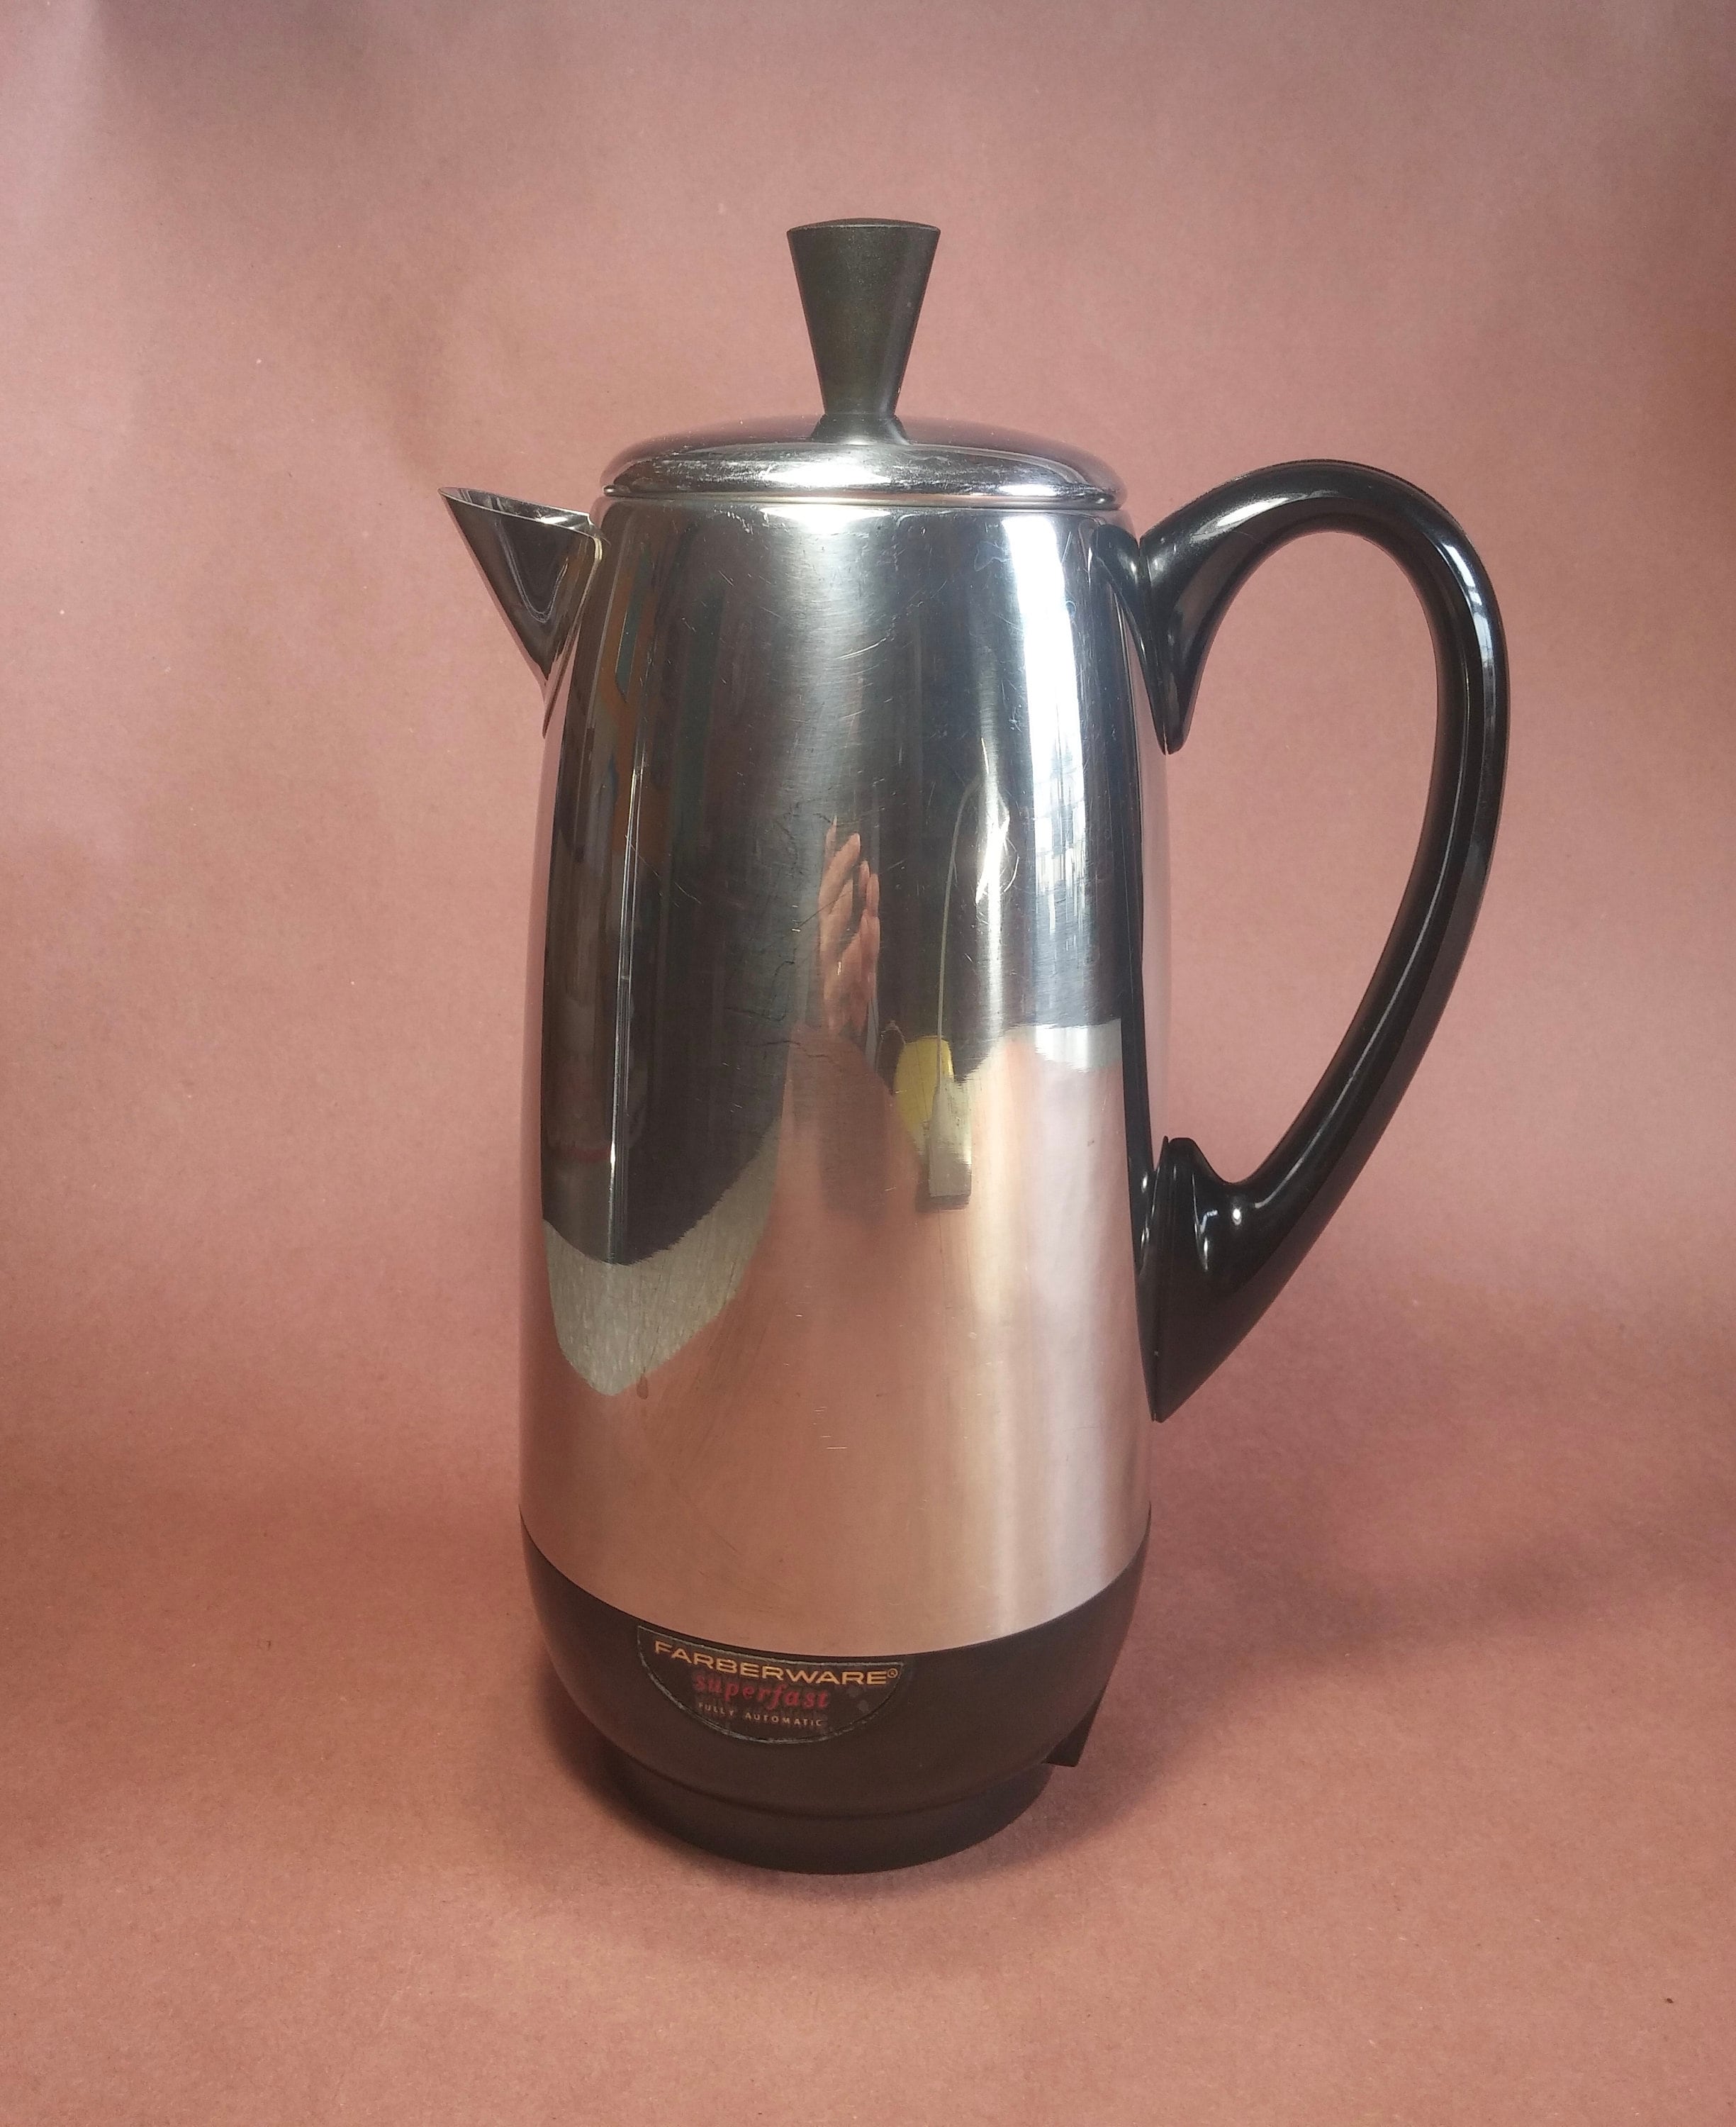 Vintage Farberware Superfast 4 Cup Electric Percolator Coffee Pot 